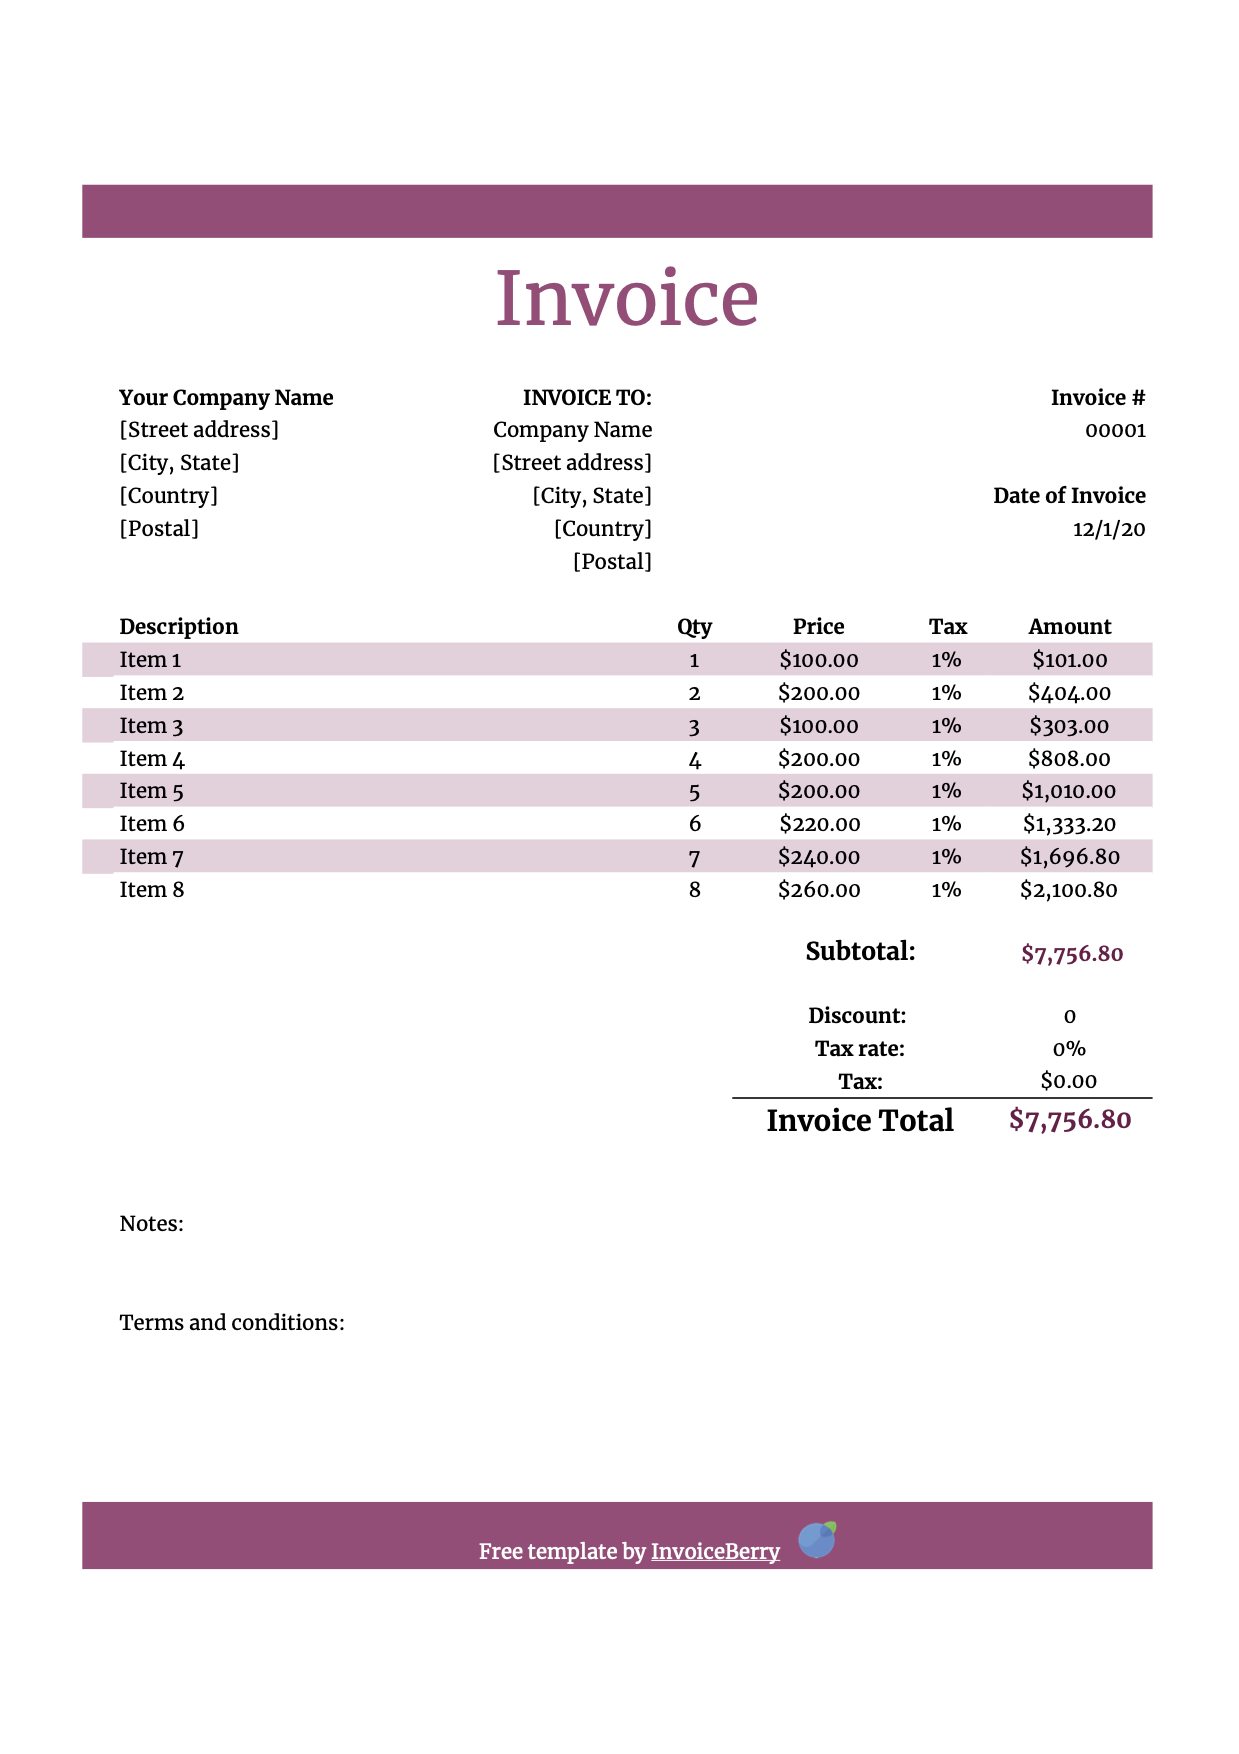 Google Sheet Invoice Template (5)